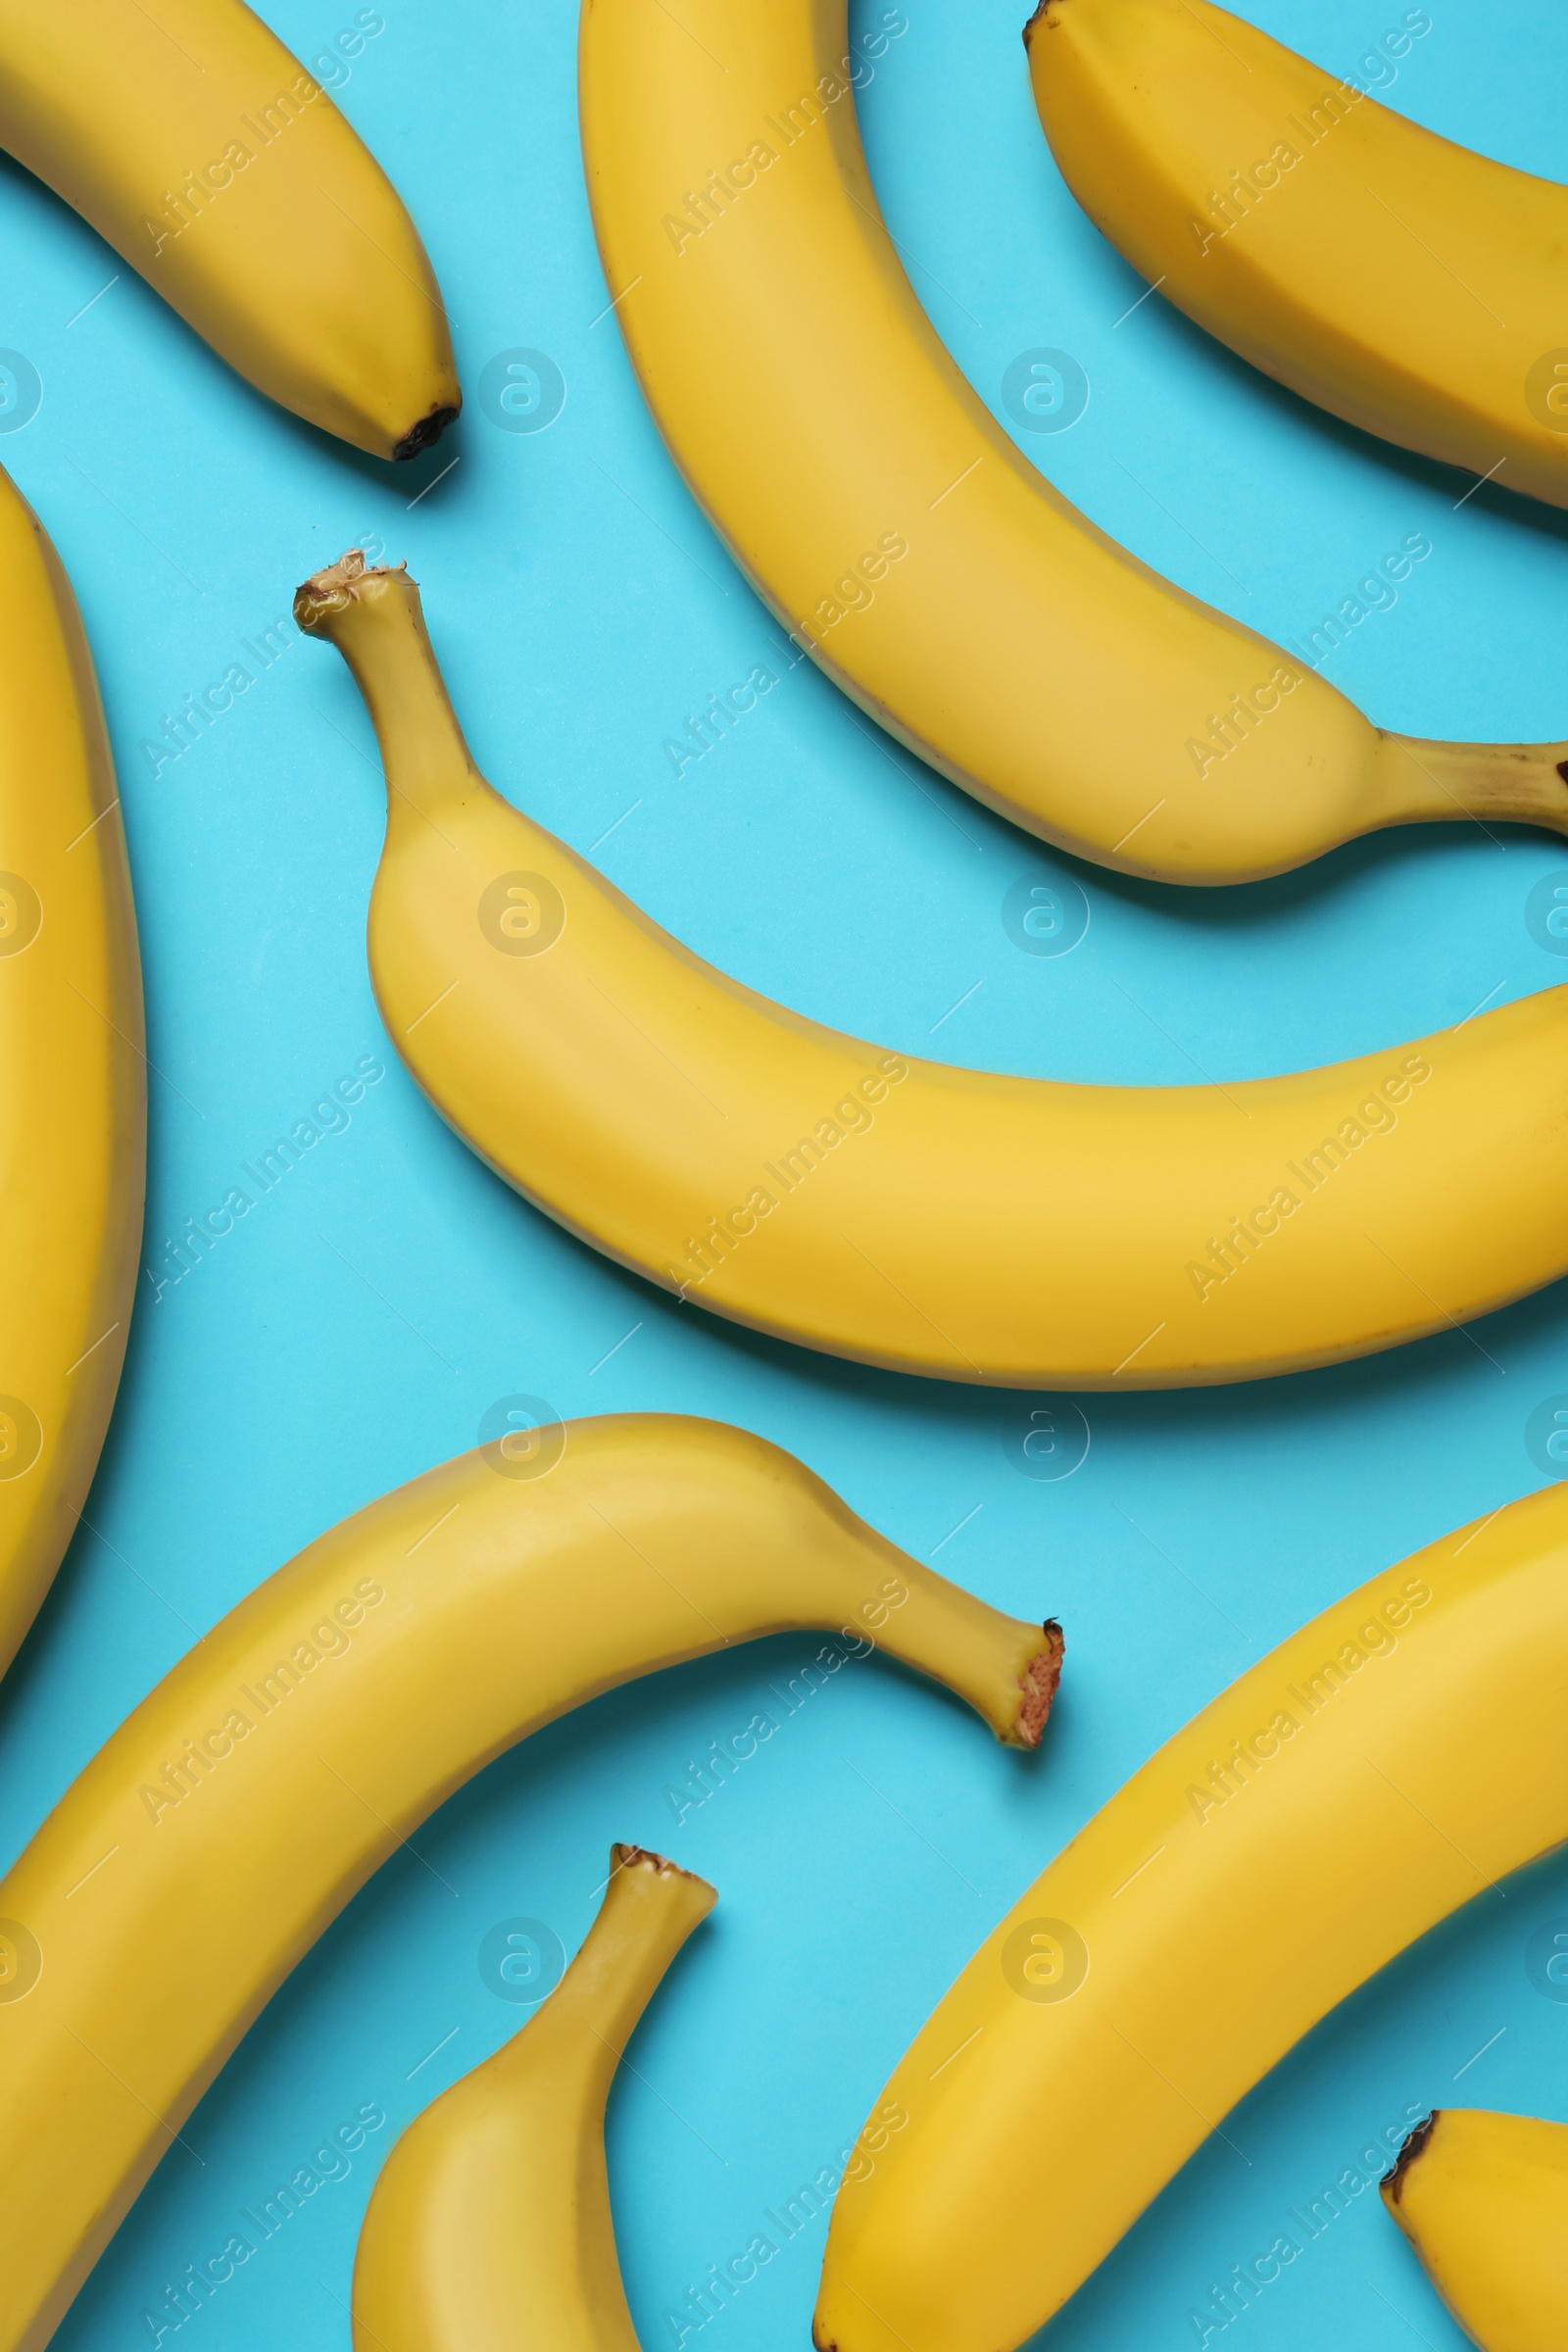 Photo of Ripe yellow bananas on turquoise background, flat lay